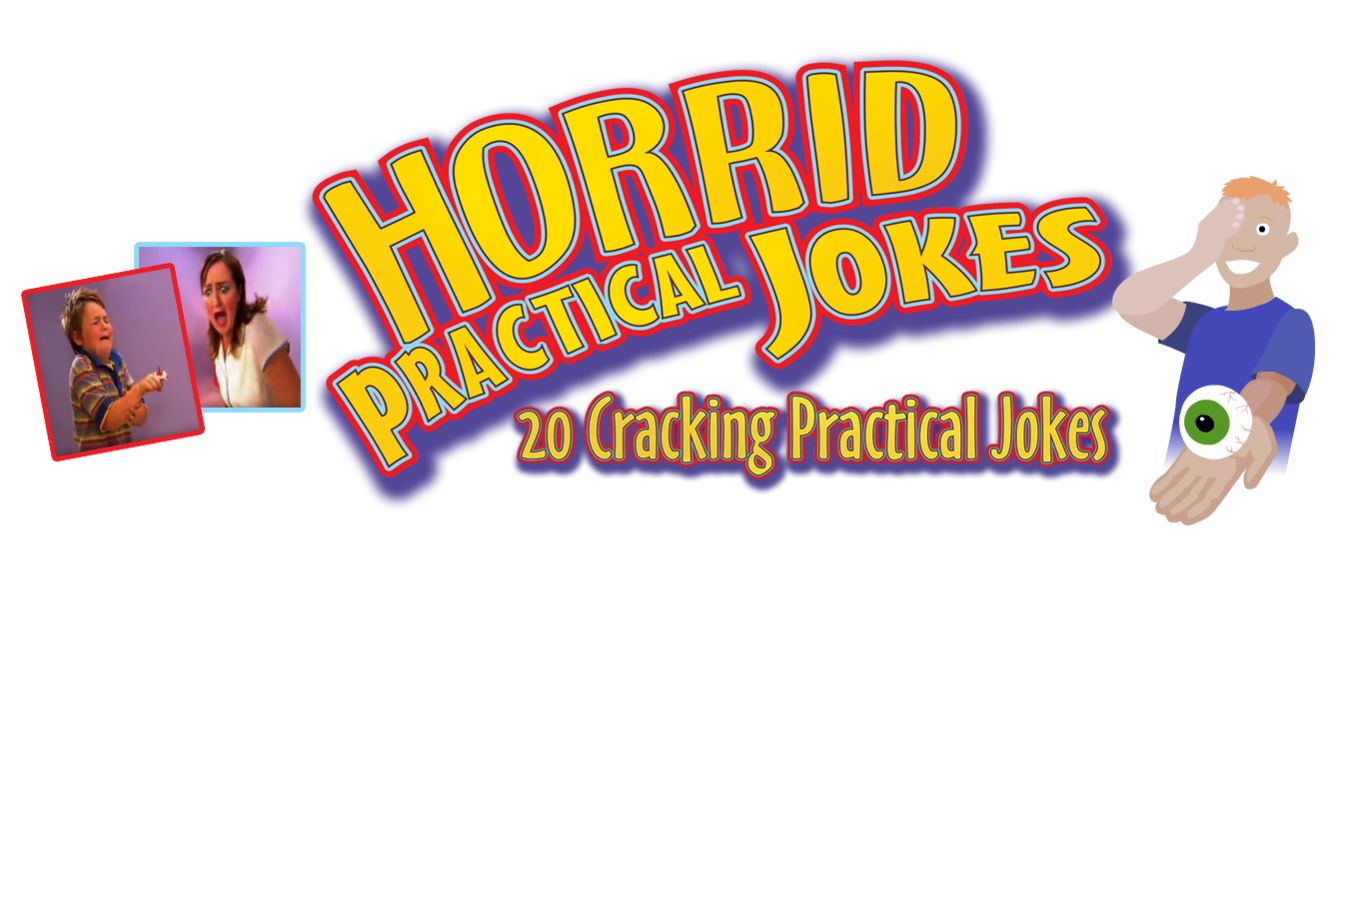 Horrid Practical Jokes